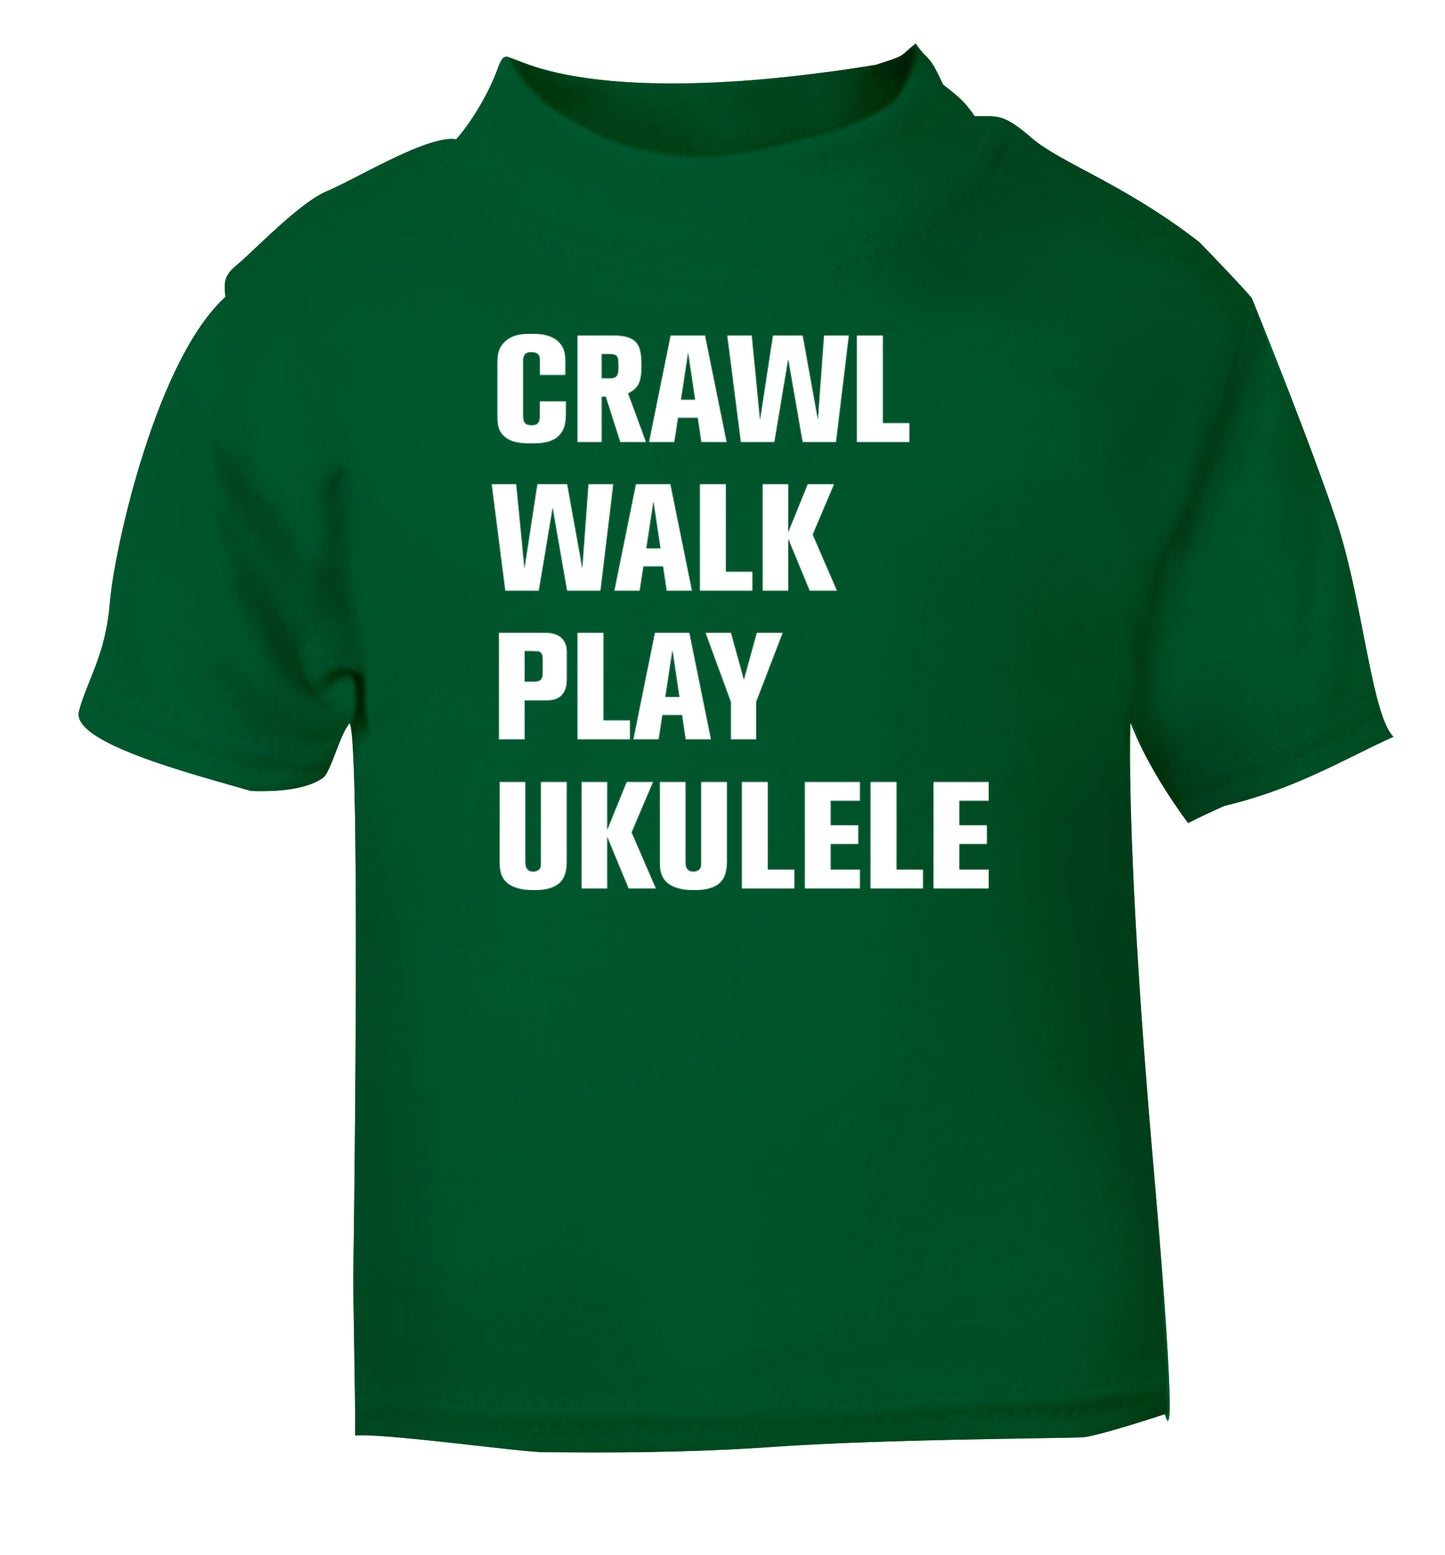 Crawl walk play ukulele green Baby Toddler Tshirt 2 Years